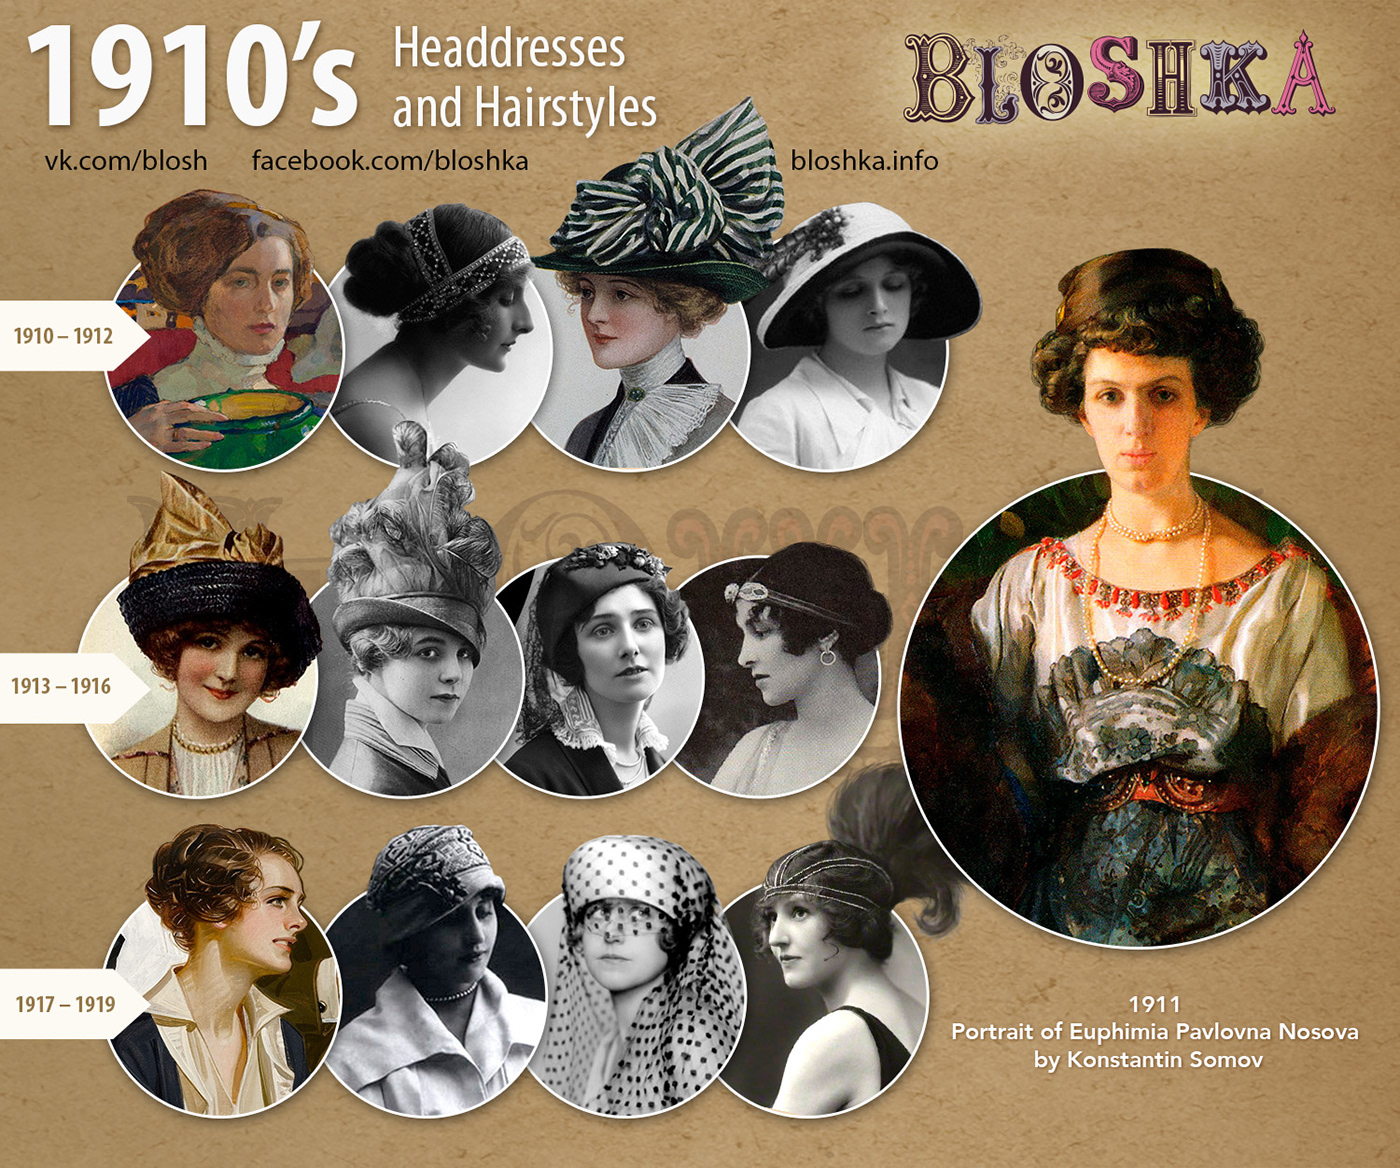 headdresses hairstyles history fashion 1910's history underwear